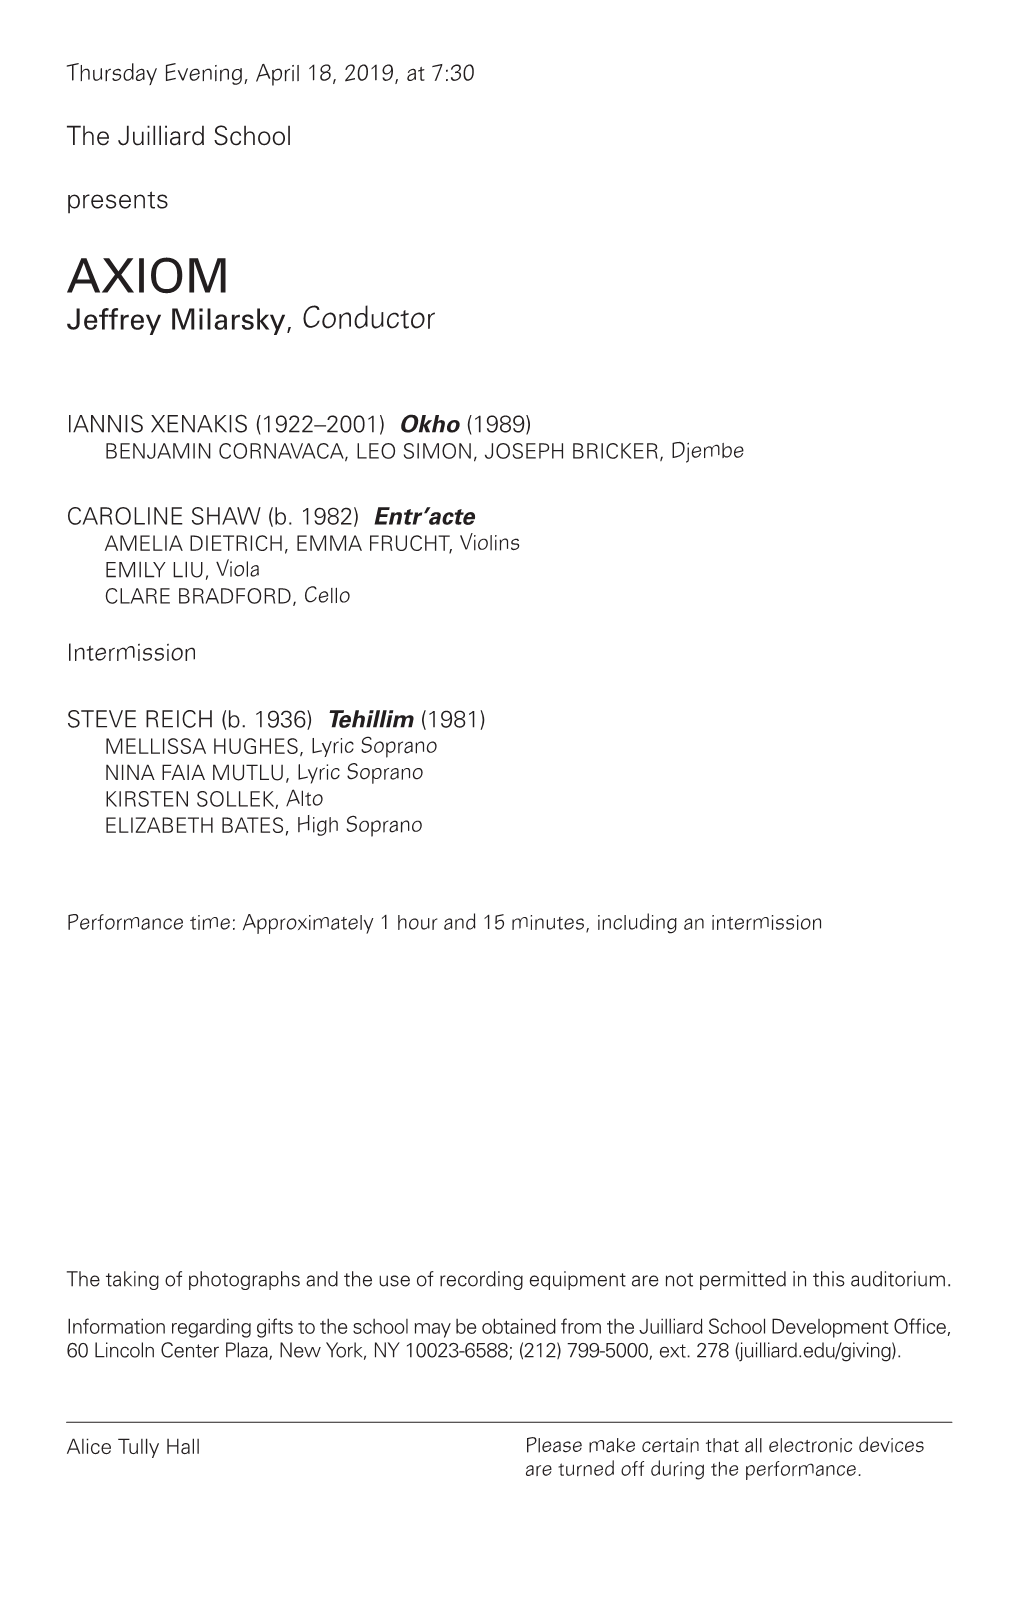 Jeffrey Milarsky, Conductor